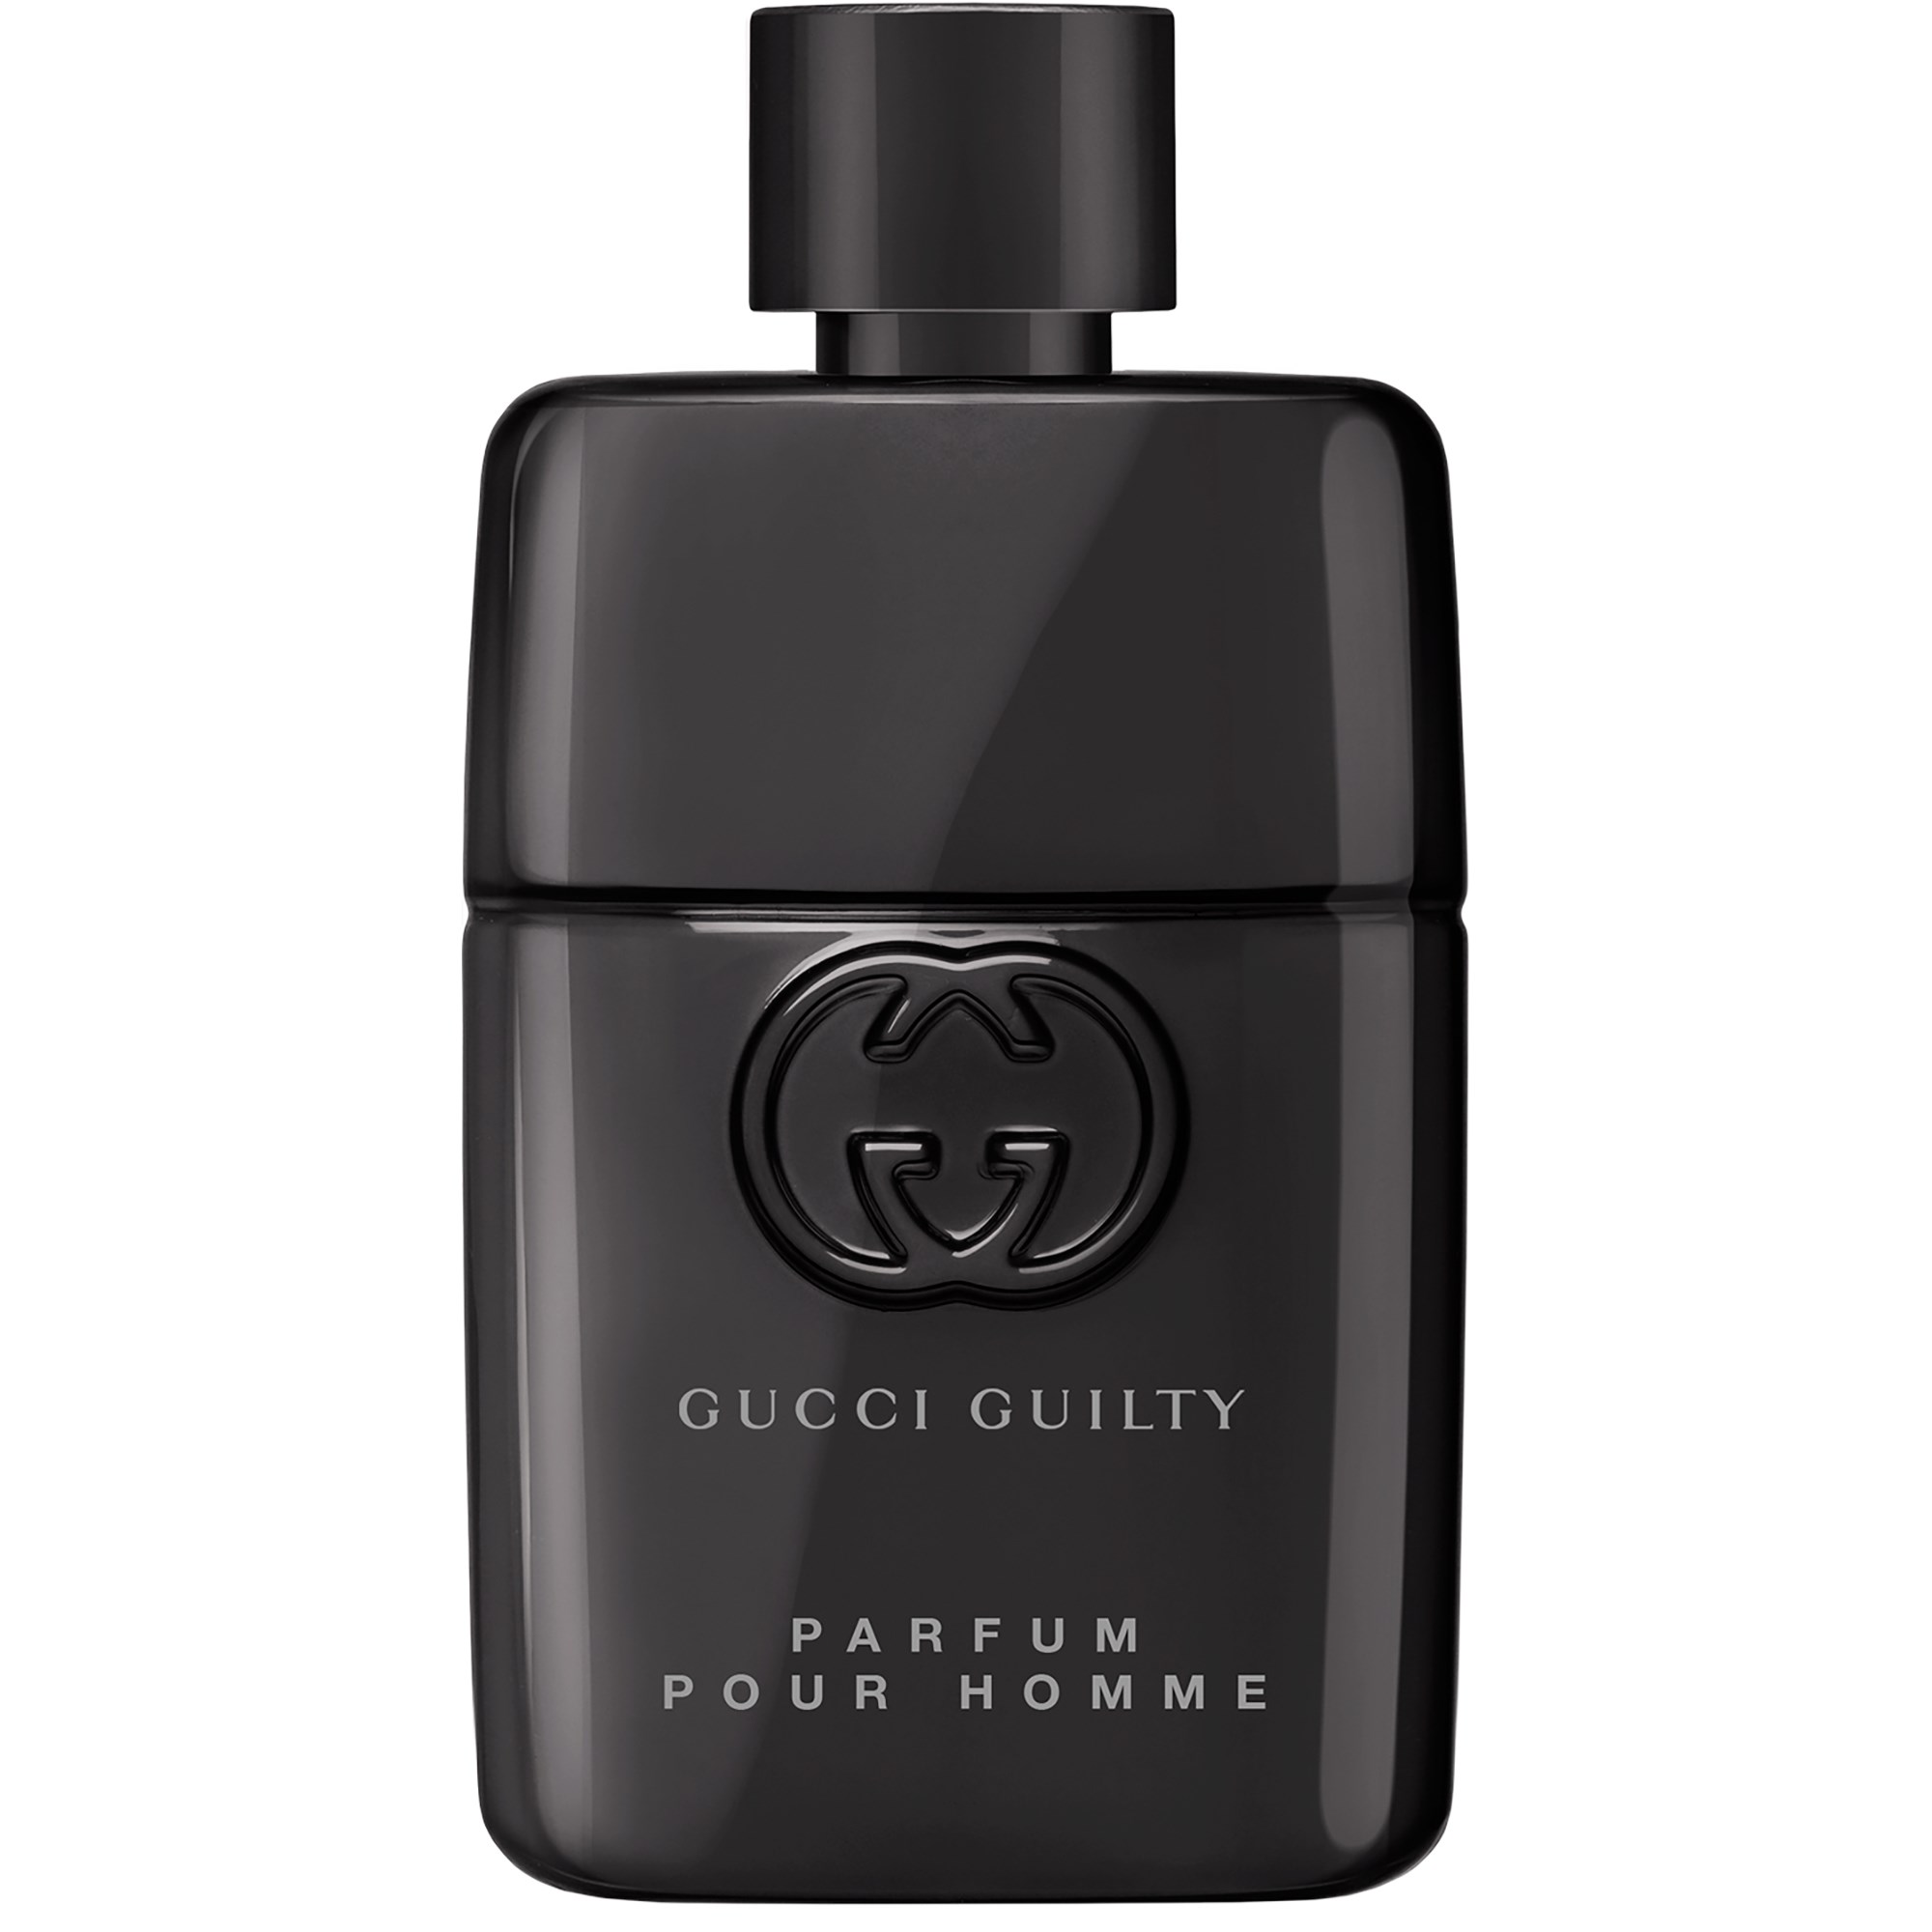 Zdjęcia - Perfuma męska GUCCI Guilty Parfum Pour Homme 50 ml 